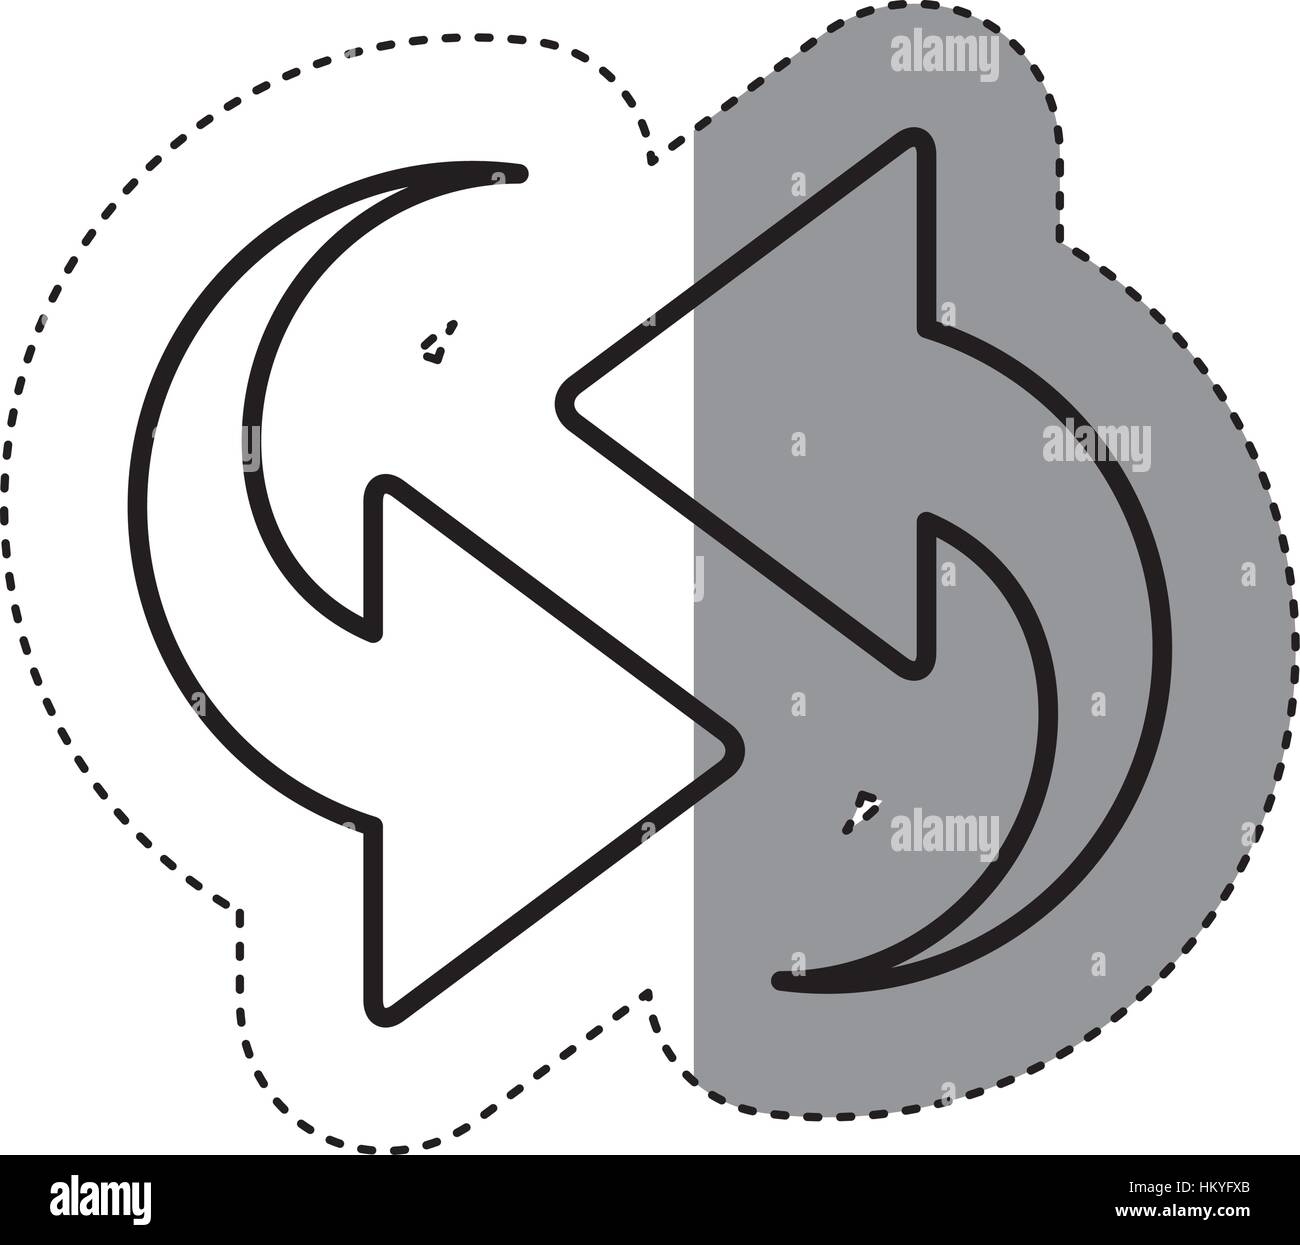 sticker silhouette arrows update in opposite directions vector illustration Stock Vector